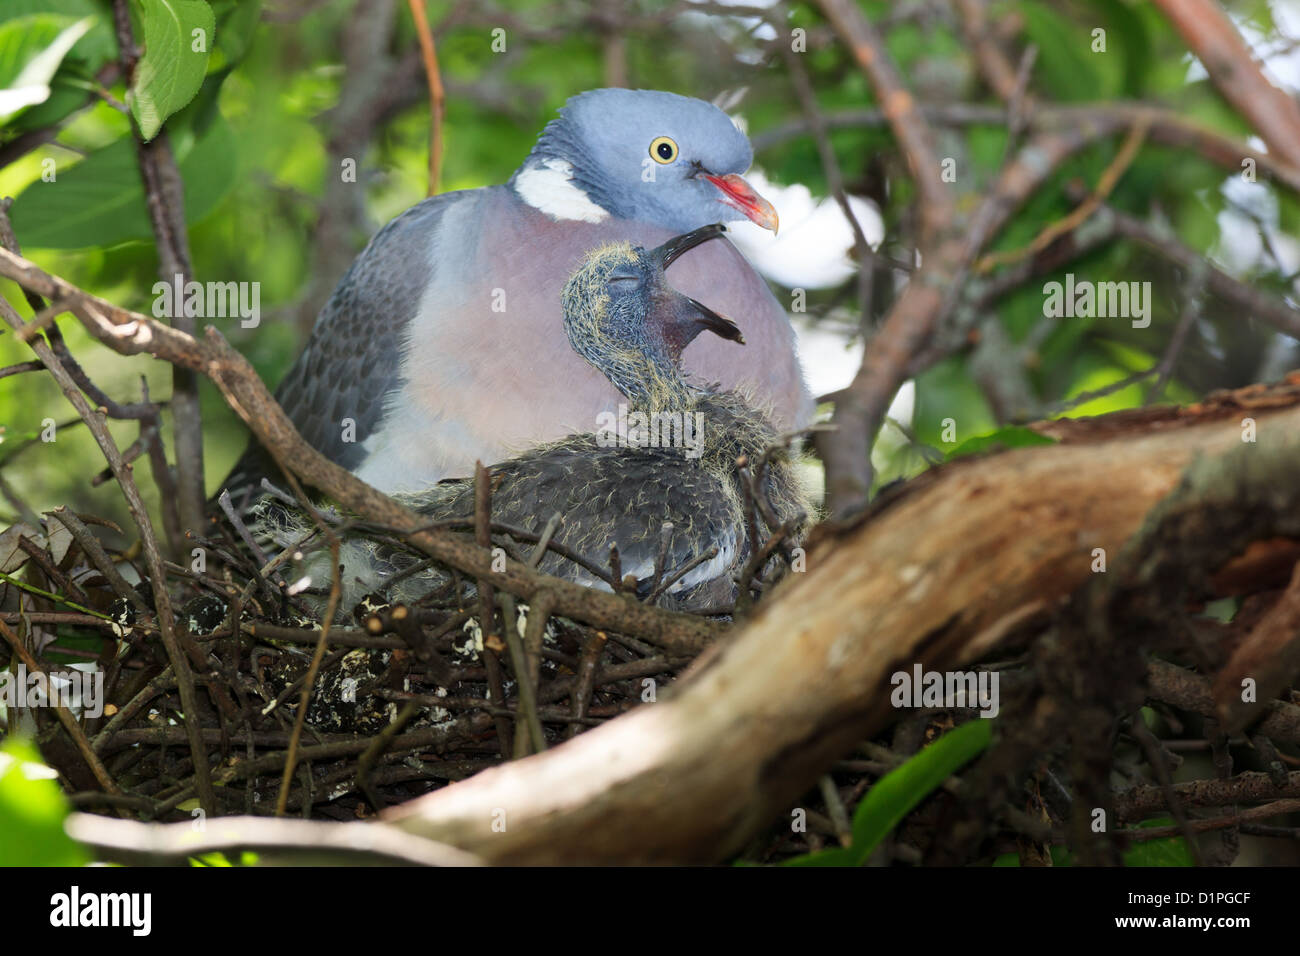 Columba palumbus, Woodpigeon. Bird warms its chicks in the nest. Stock Photo